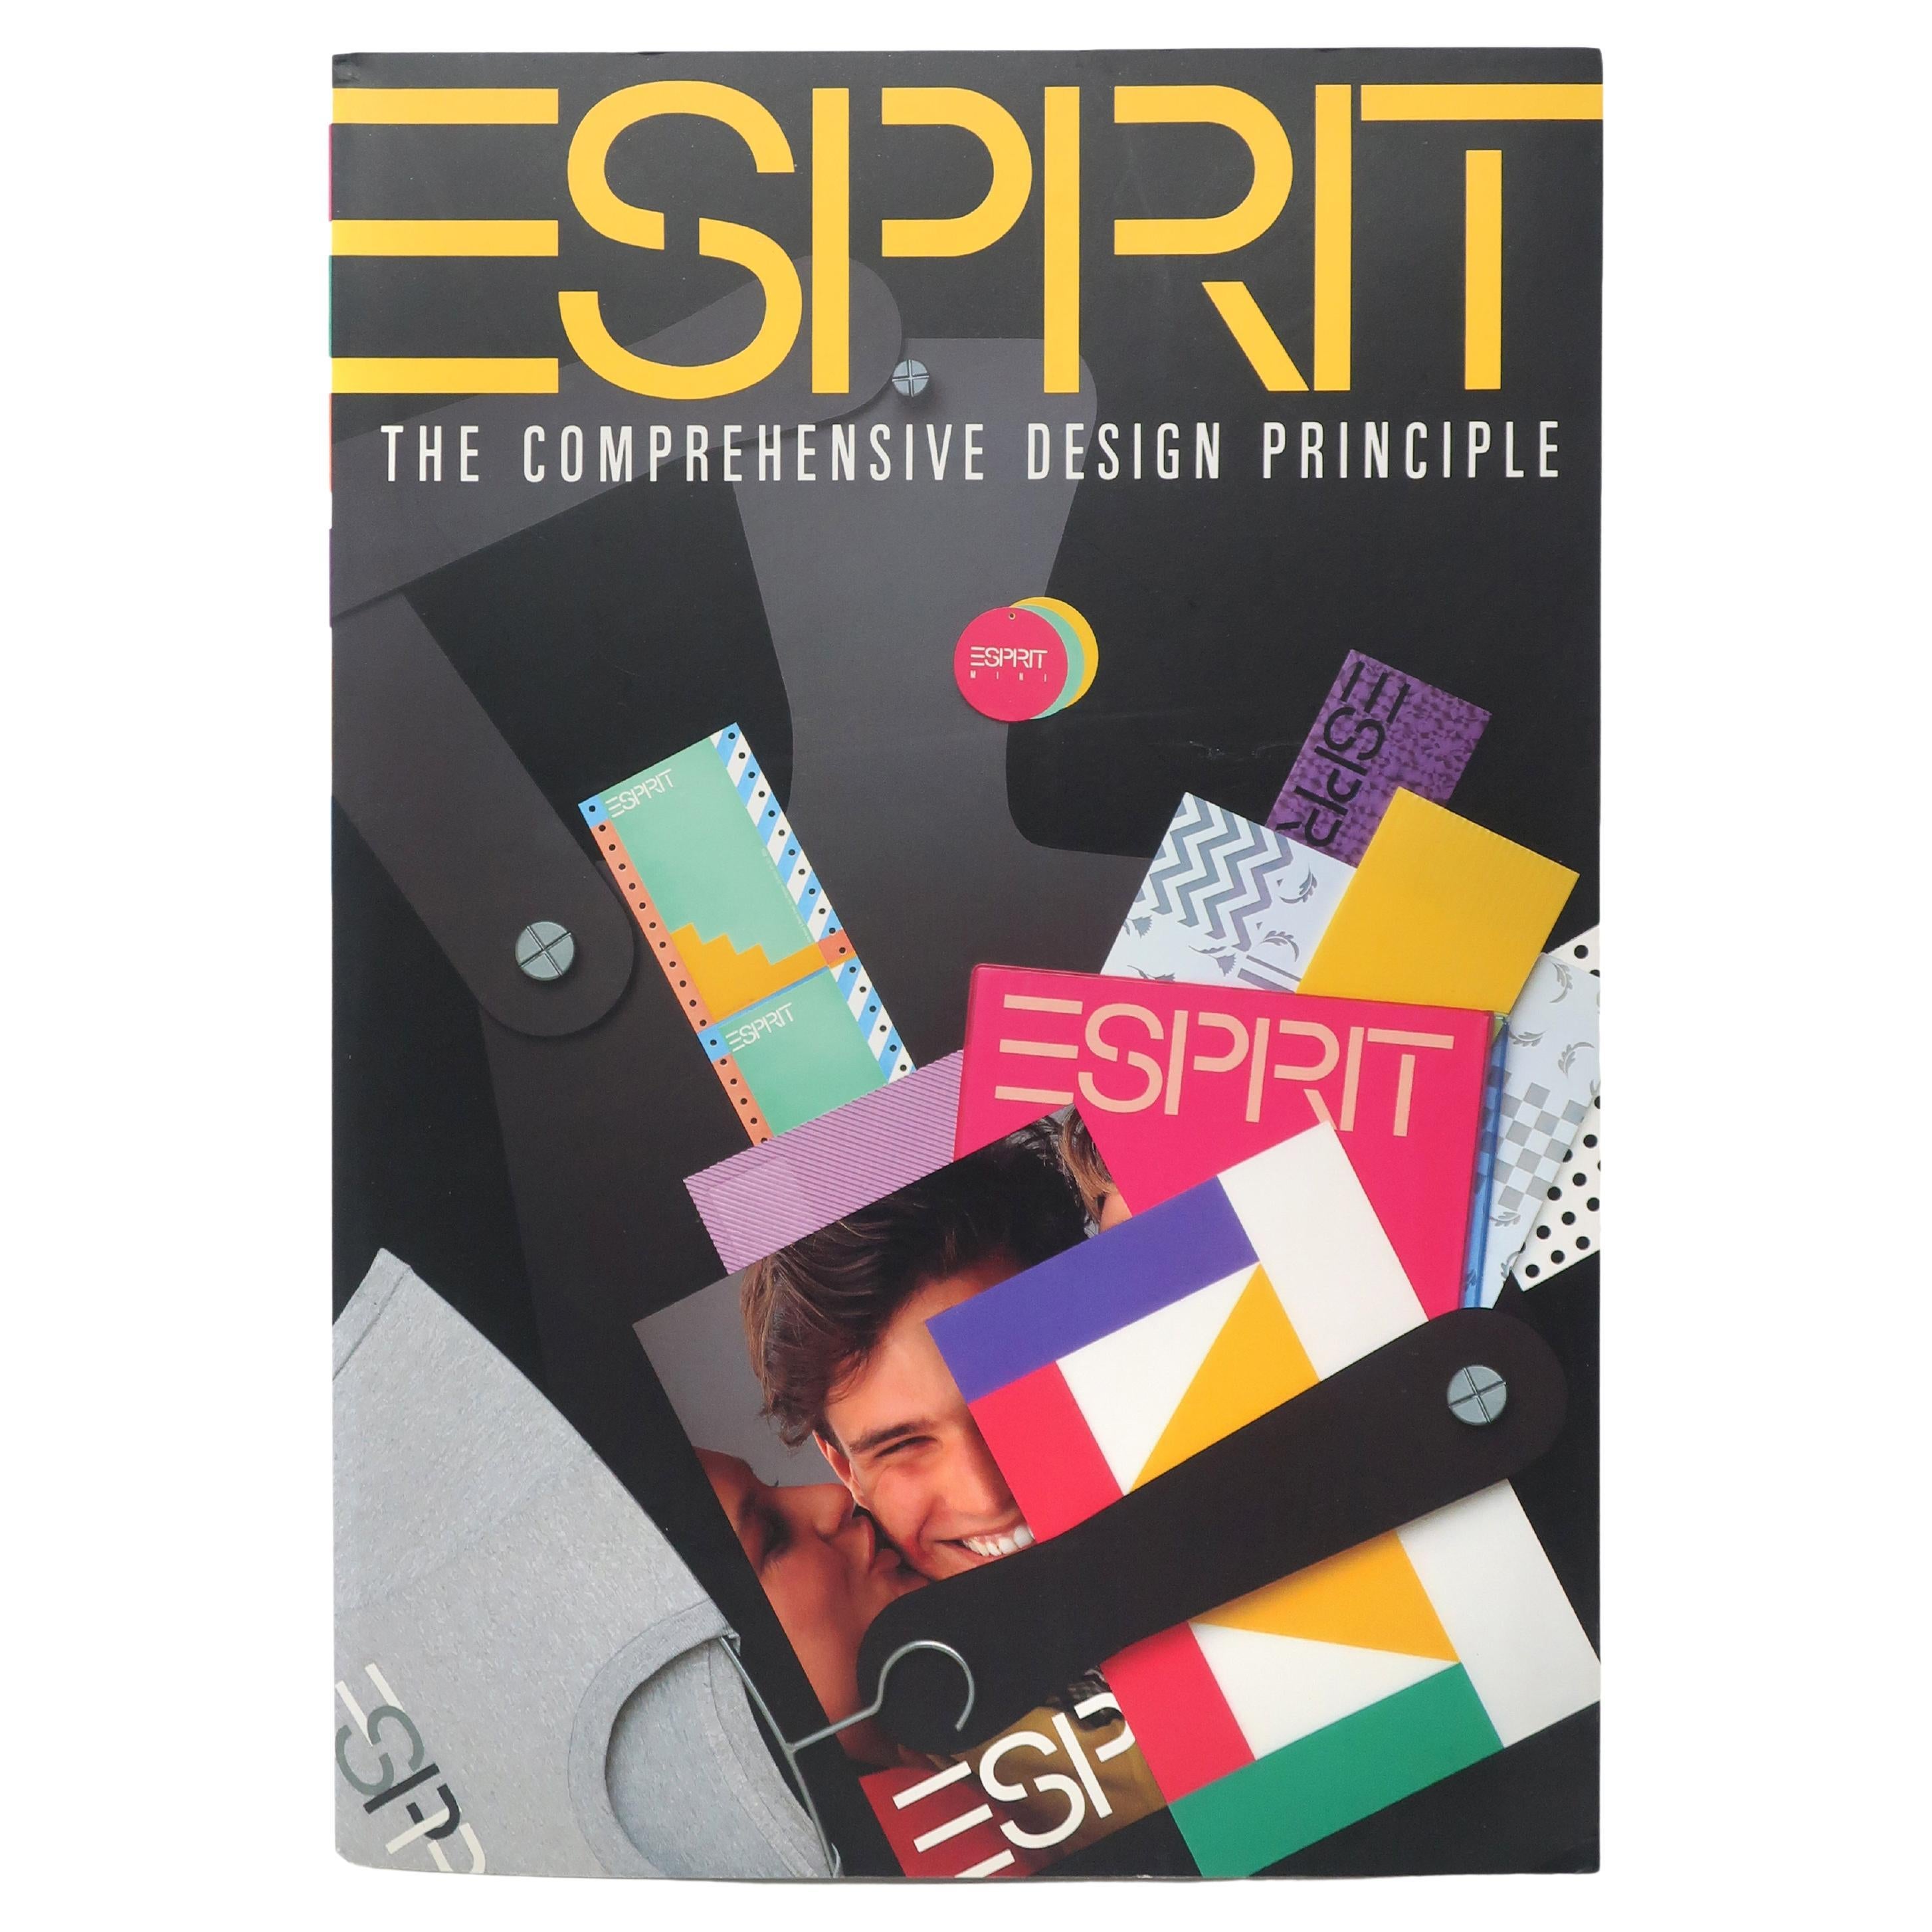 Esprit The Comprehensive Design Principle Book by Douglas Tompkins